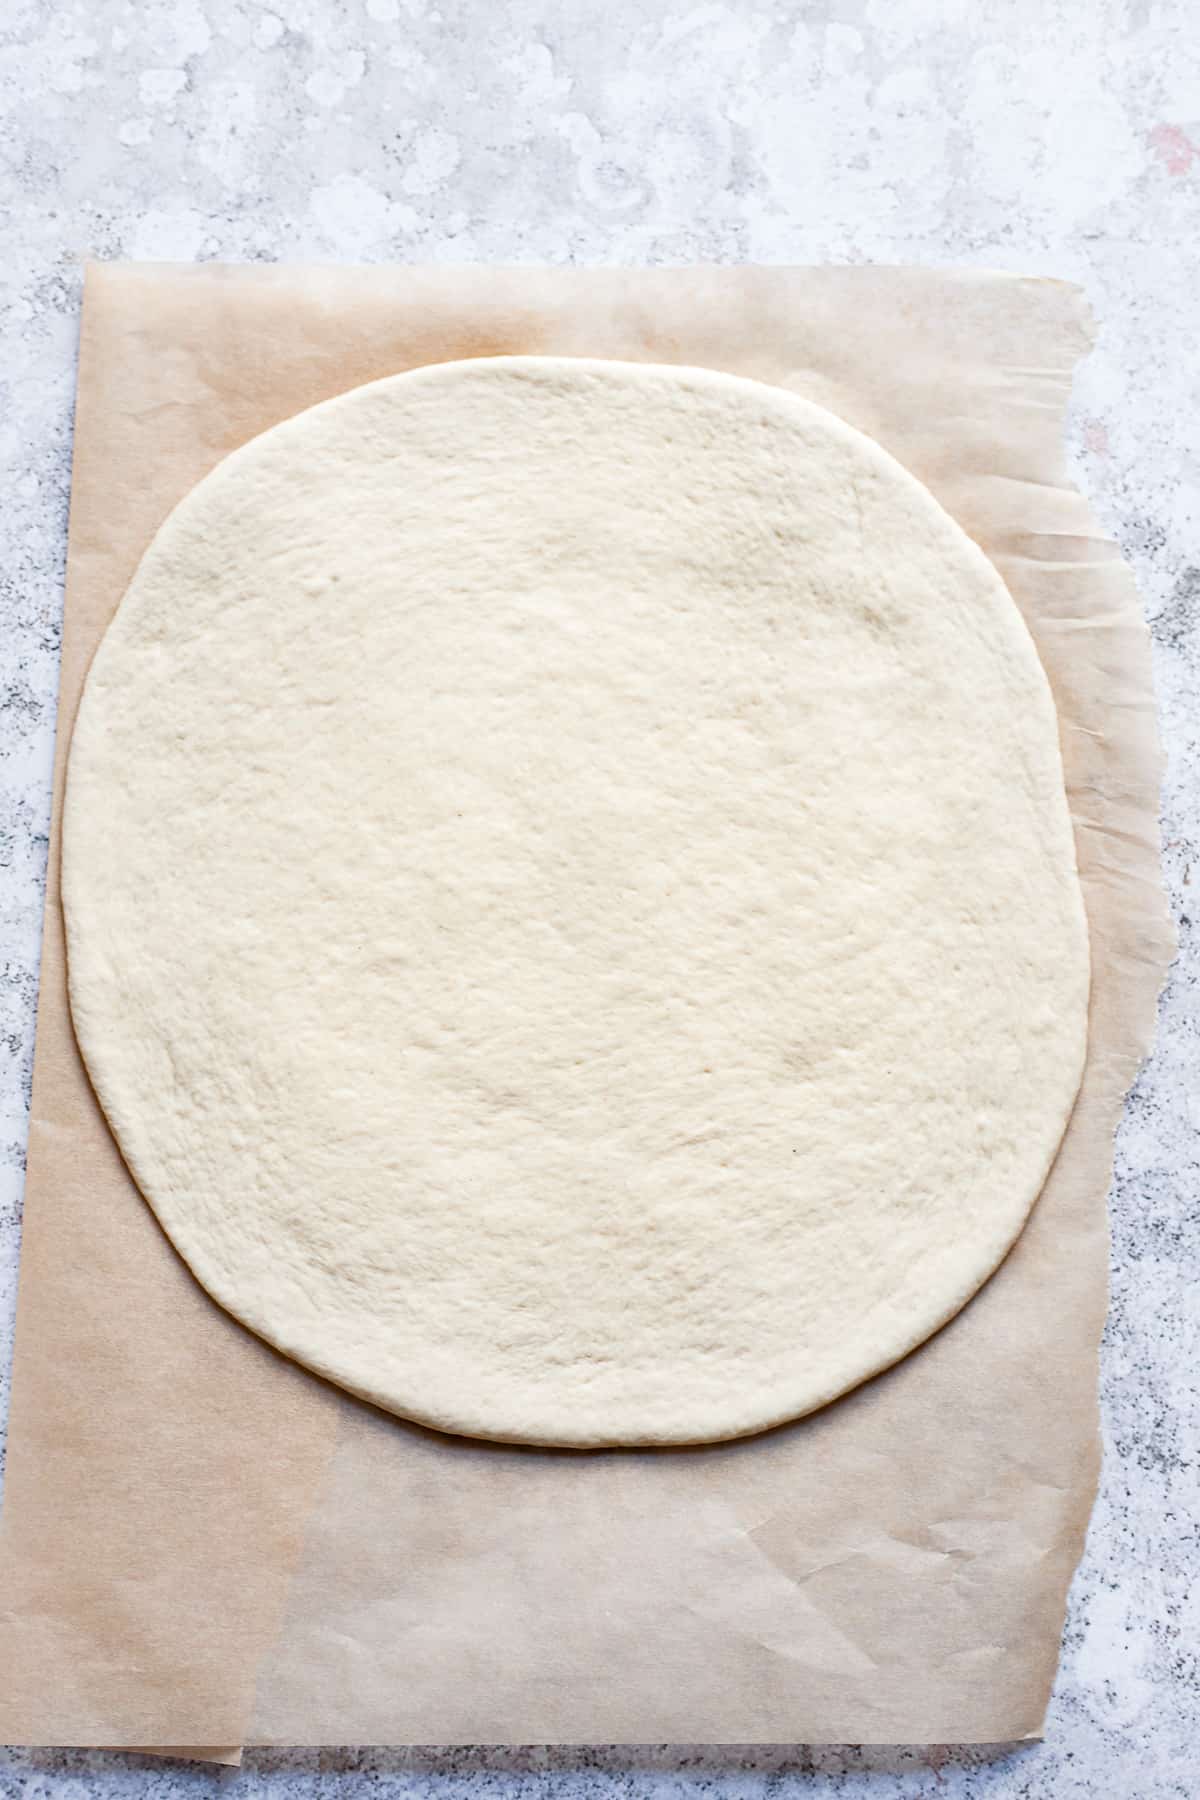 New York-style pizza thin dough